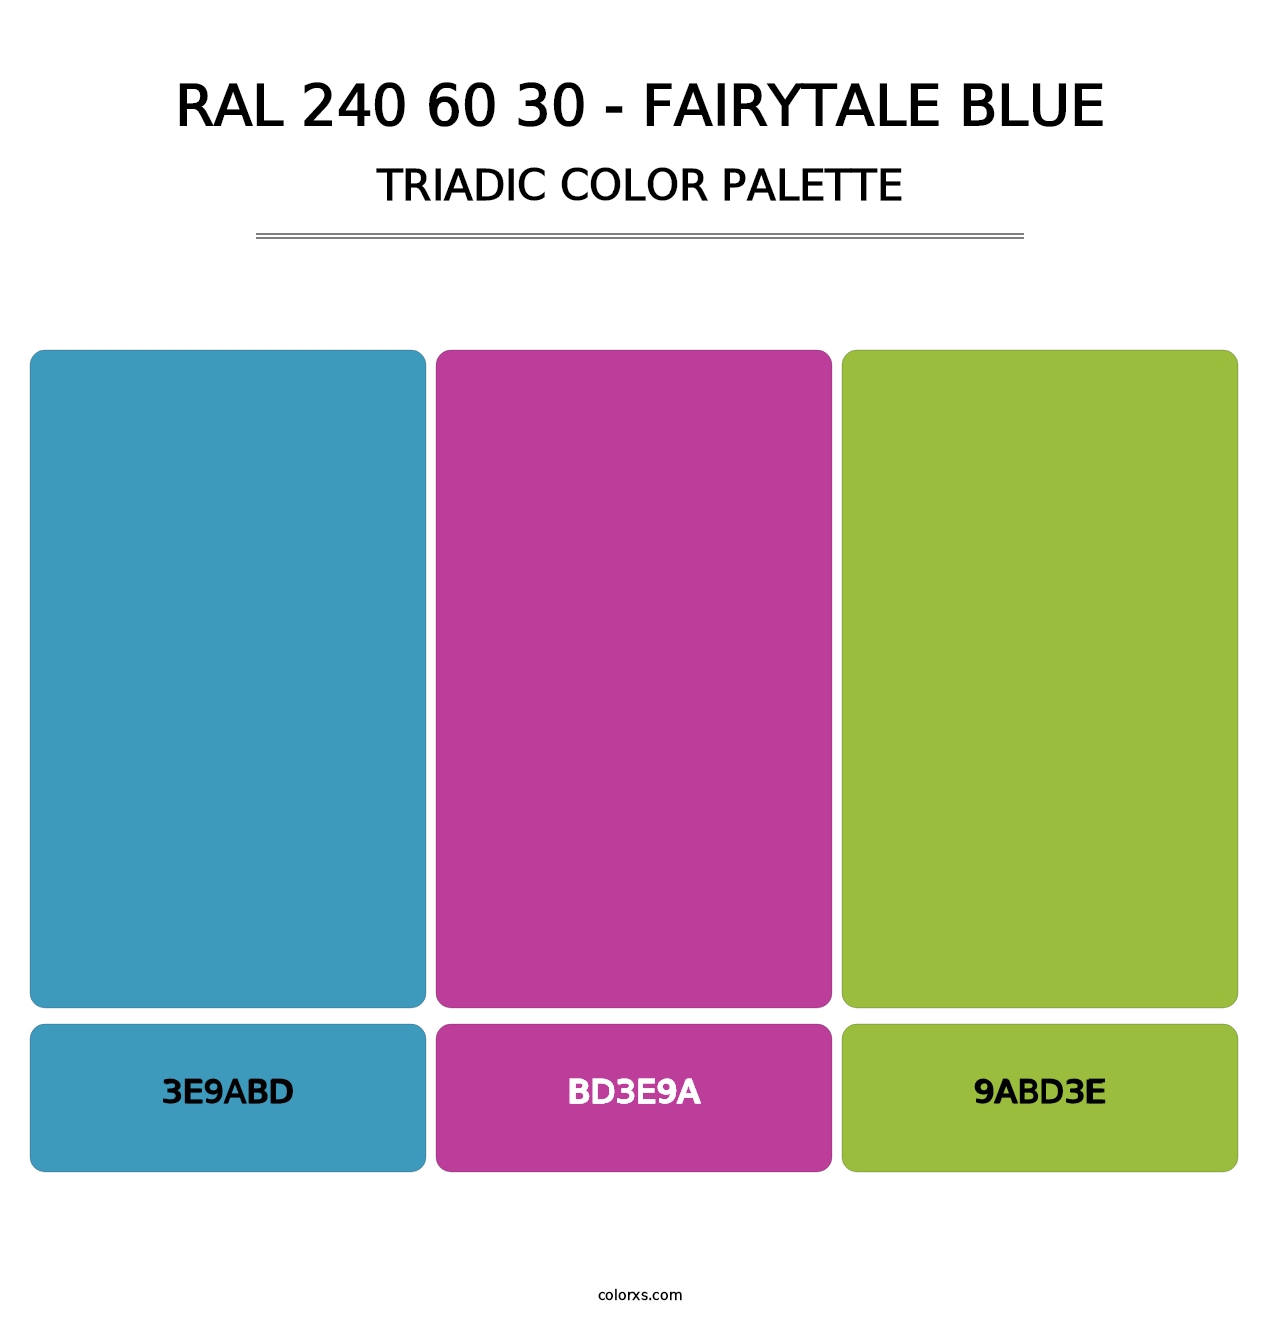 RAL 240 60 30 - Fairytale Blue - Triadic Color Palette